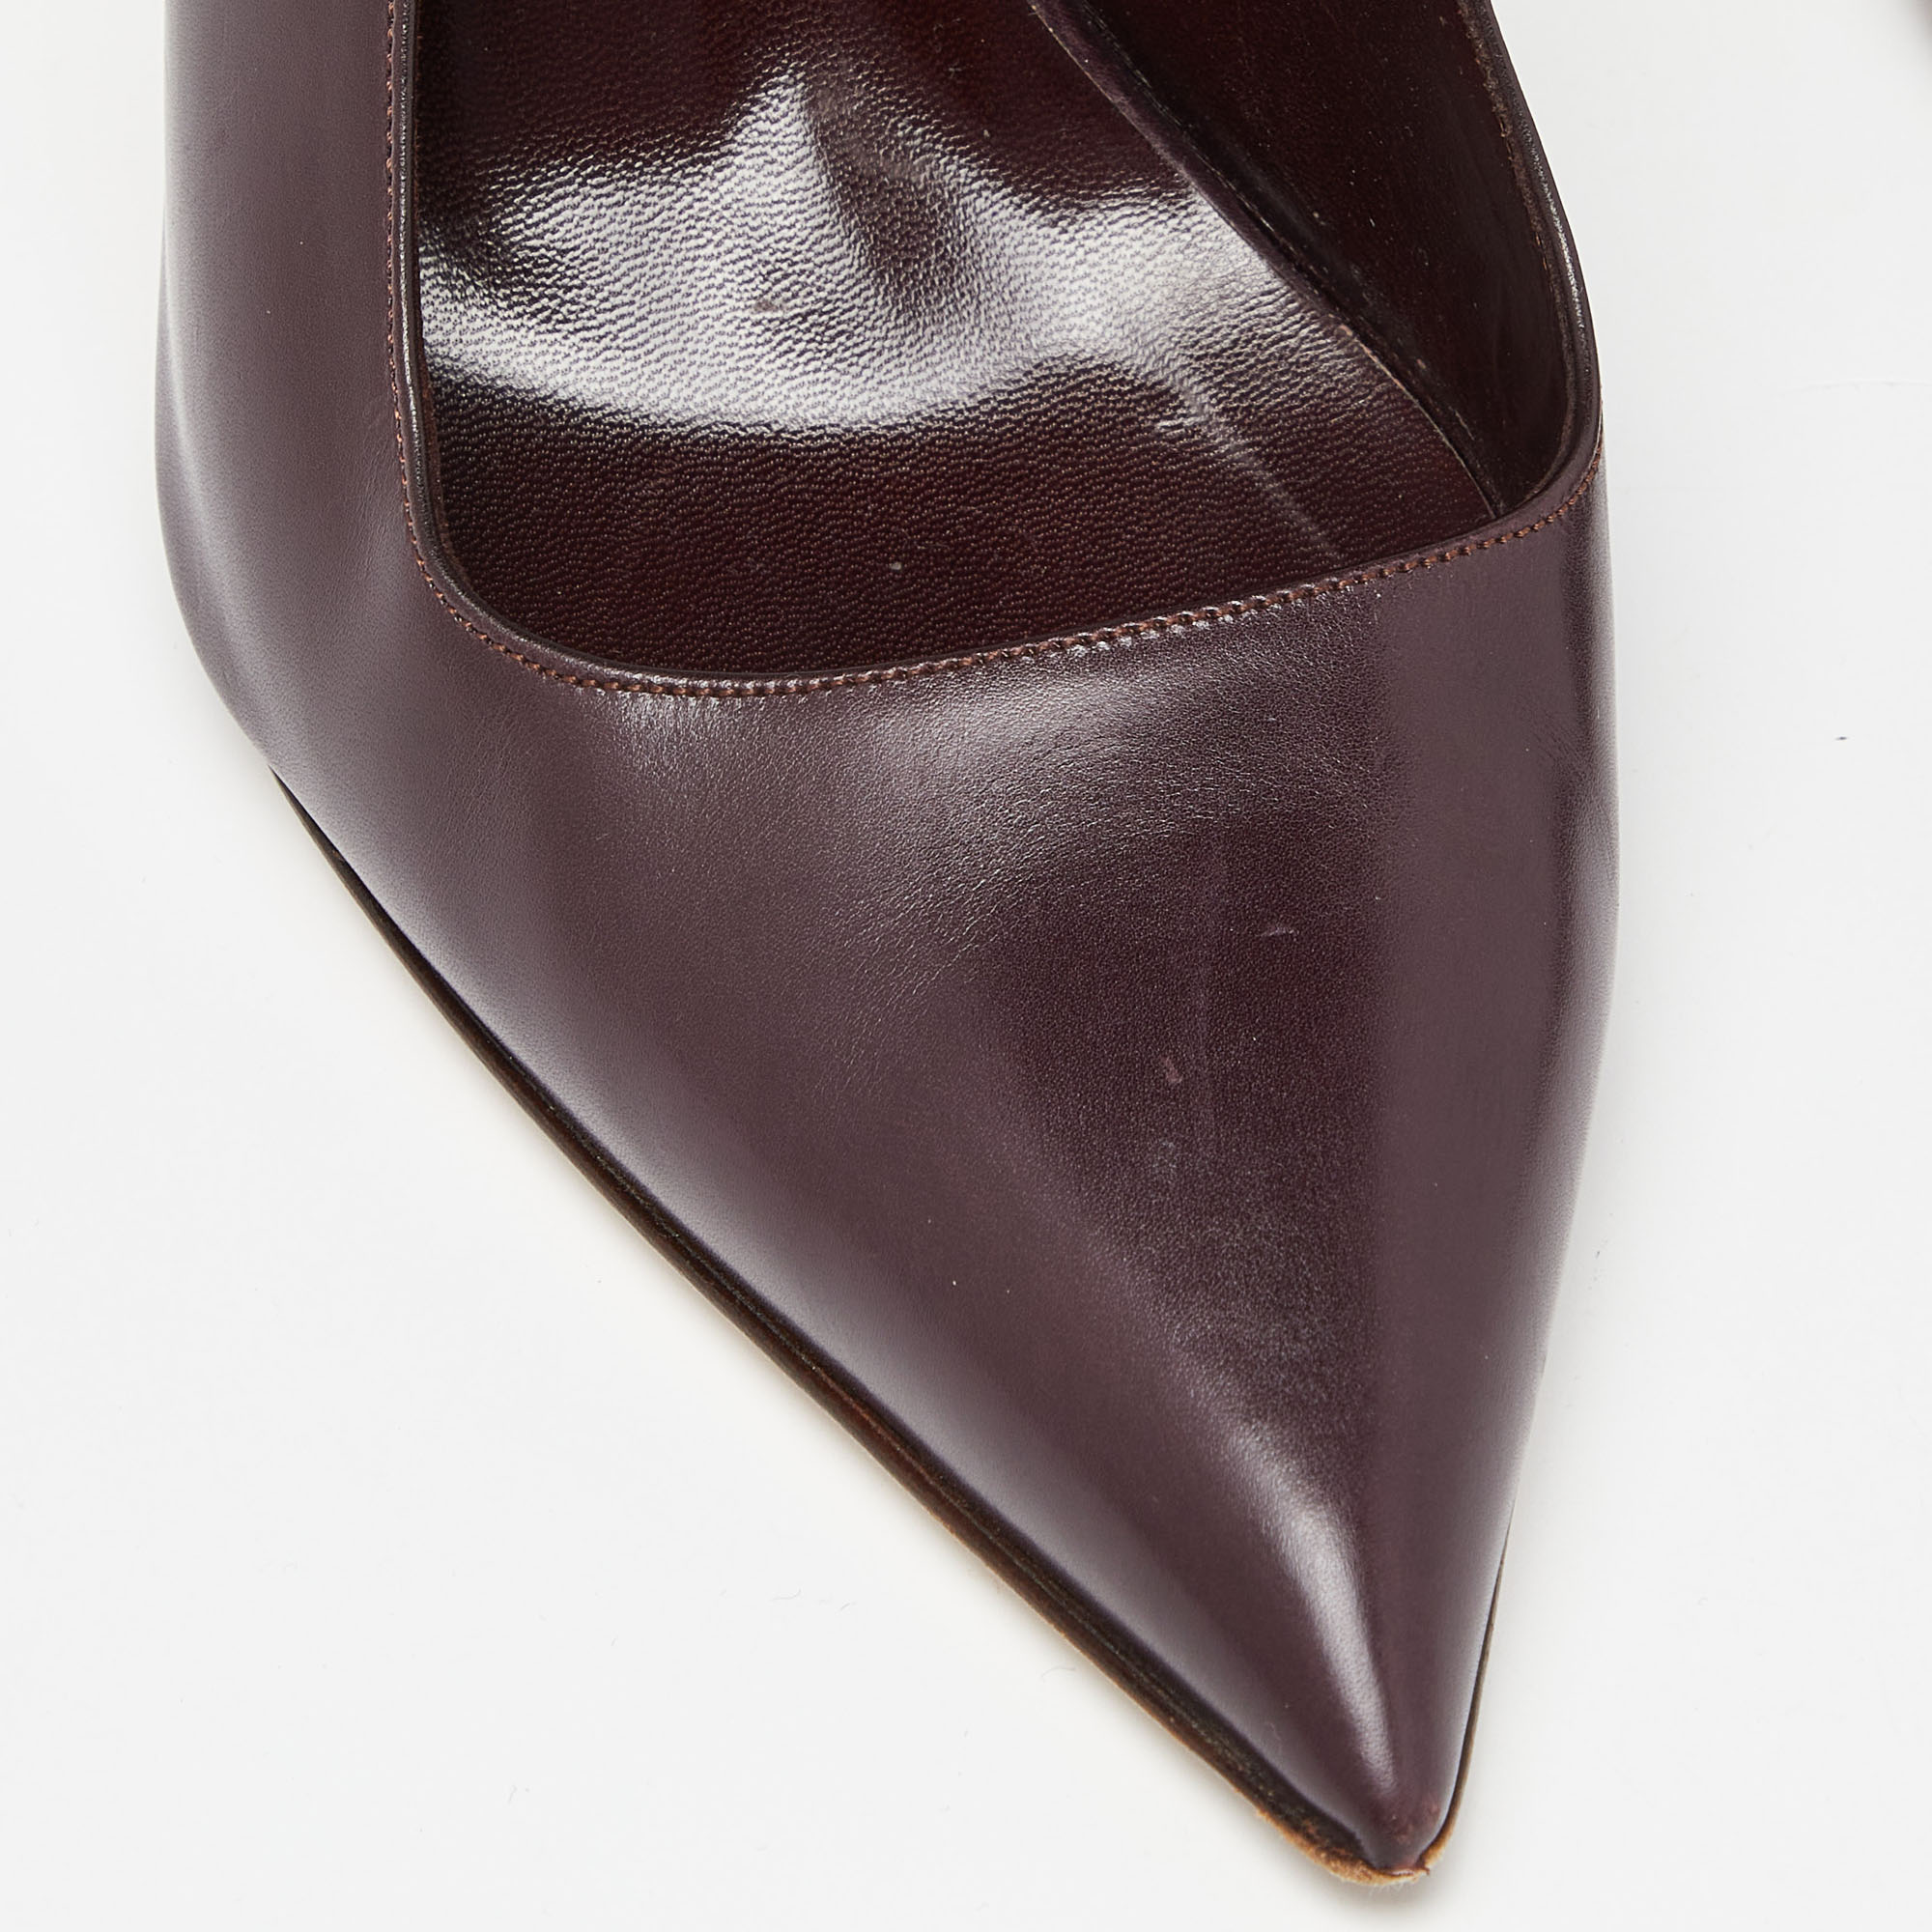 Manolo Blahnik Burgundy Leather Pointed Toe Slingback Pumps Size 38